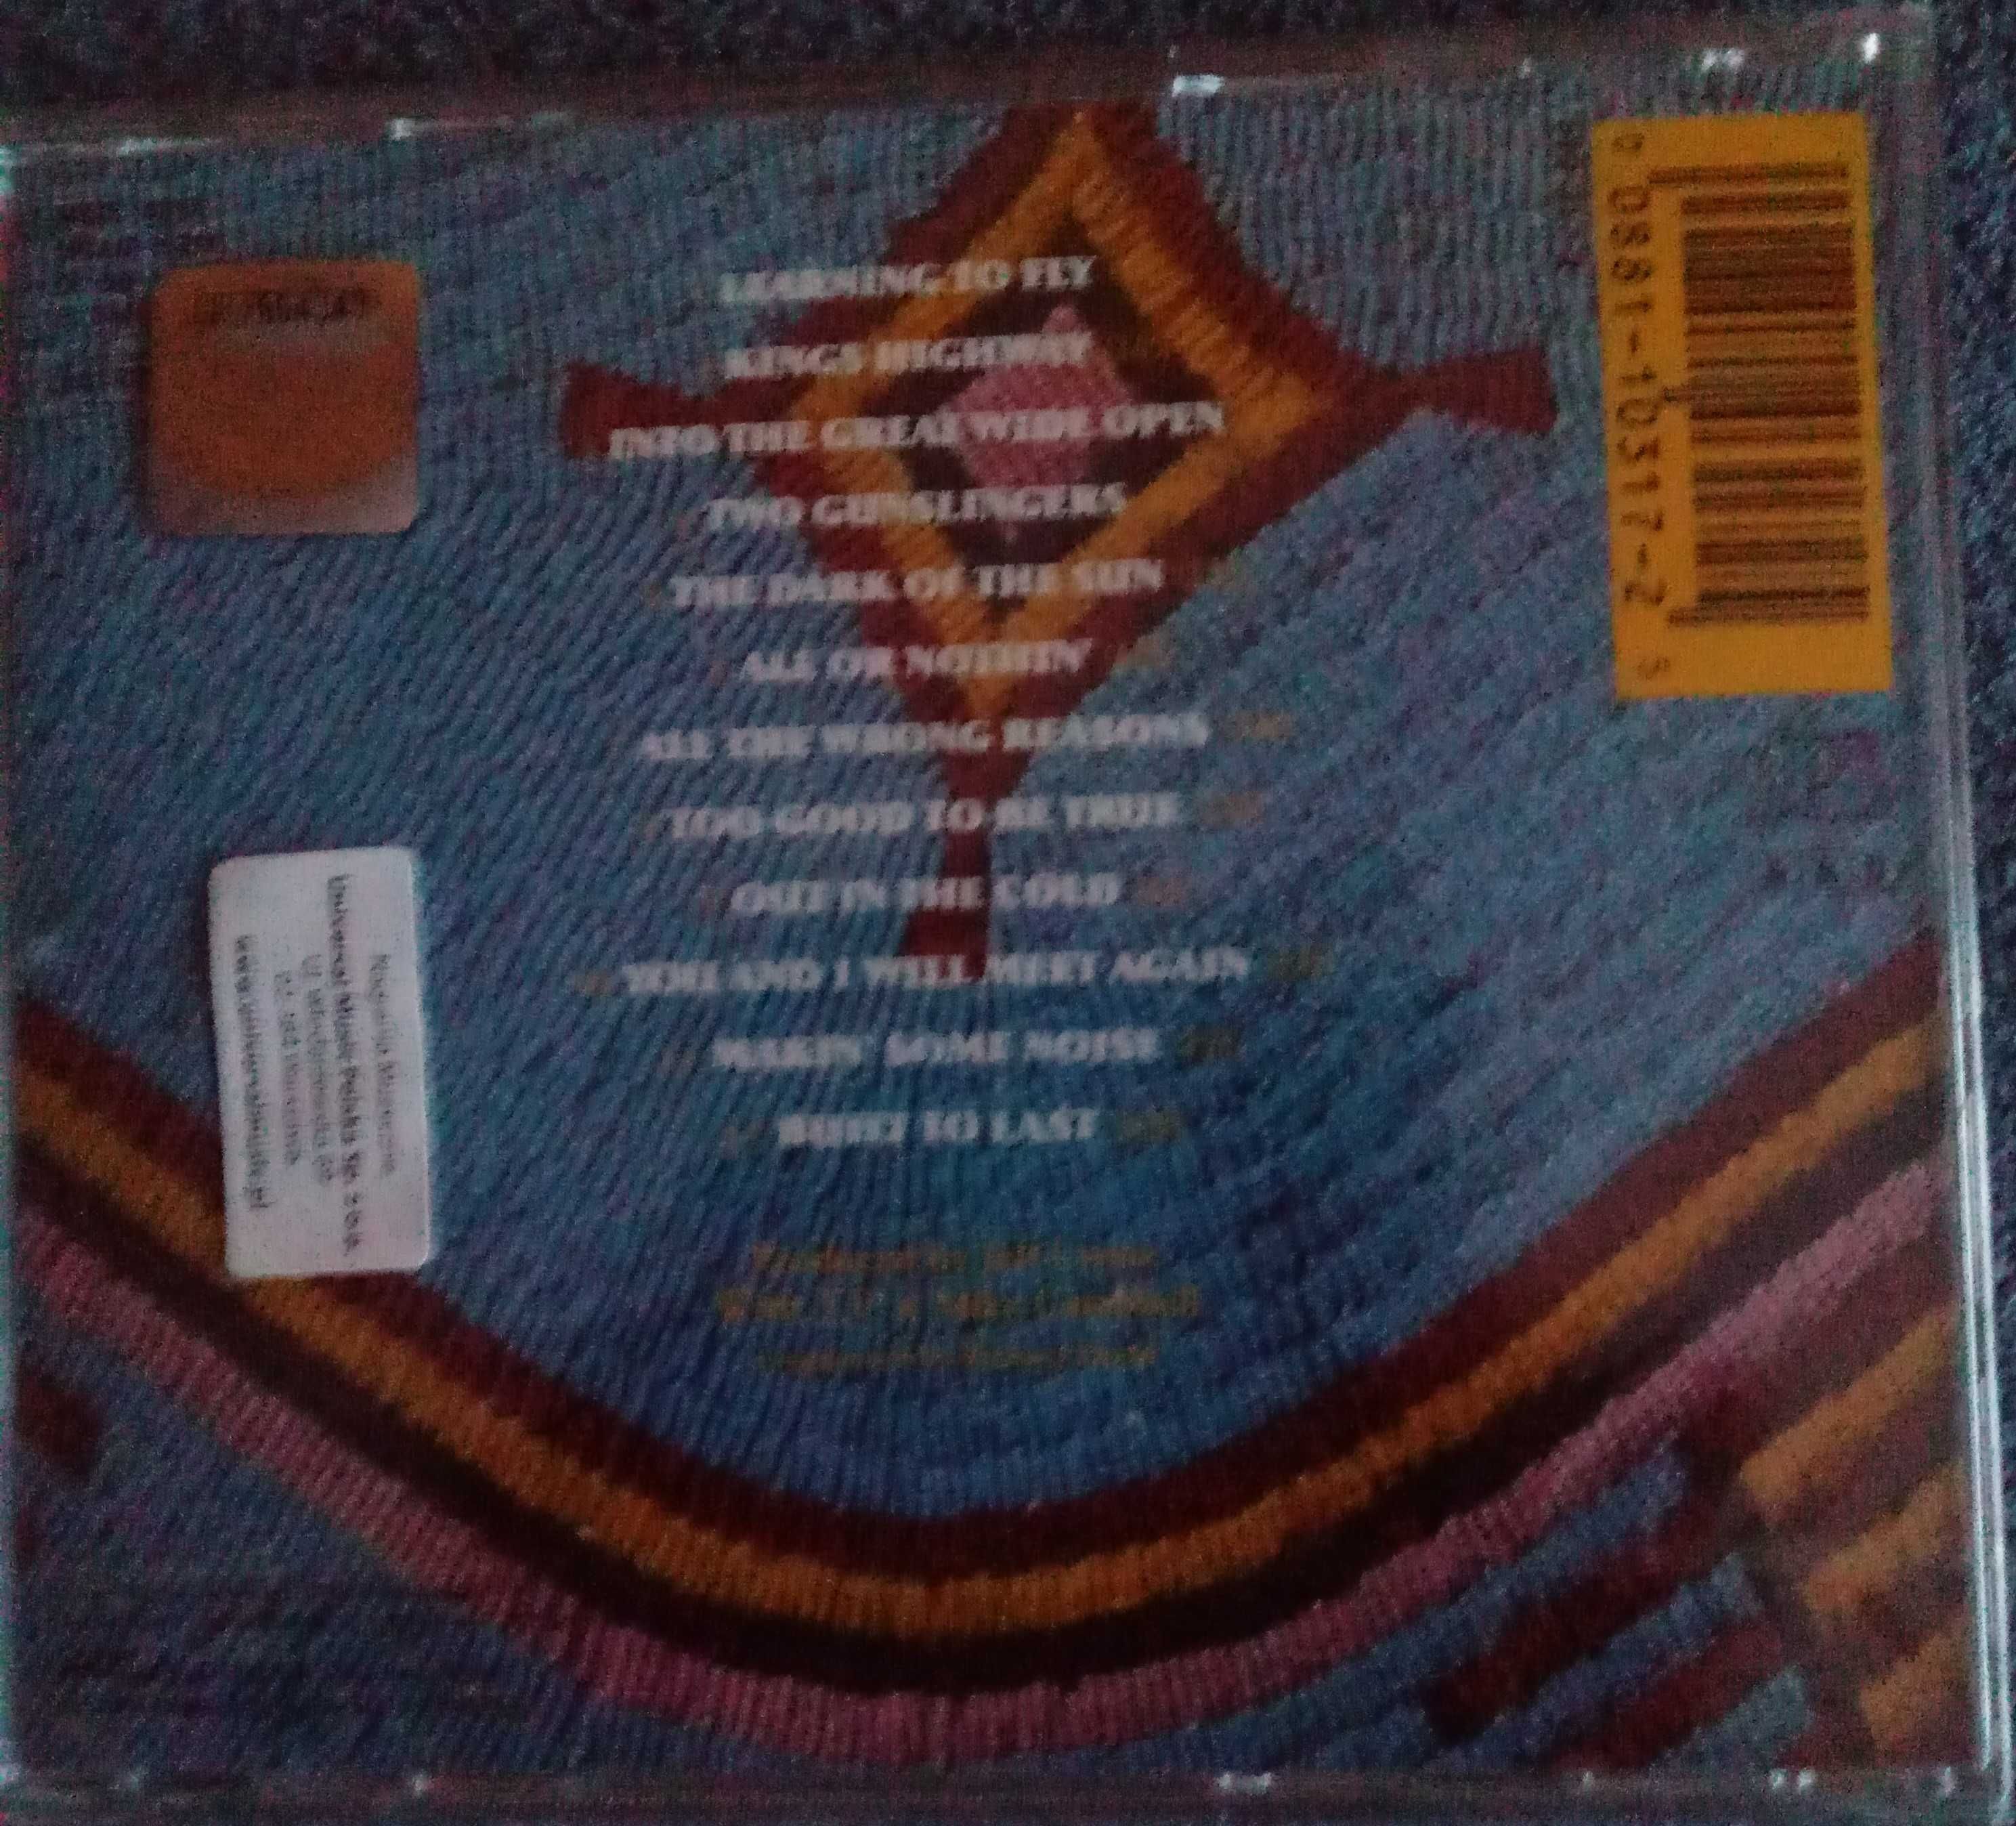 hello/tom petty/j geils band/king s cd